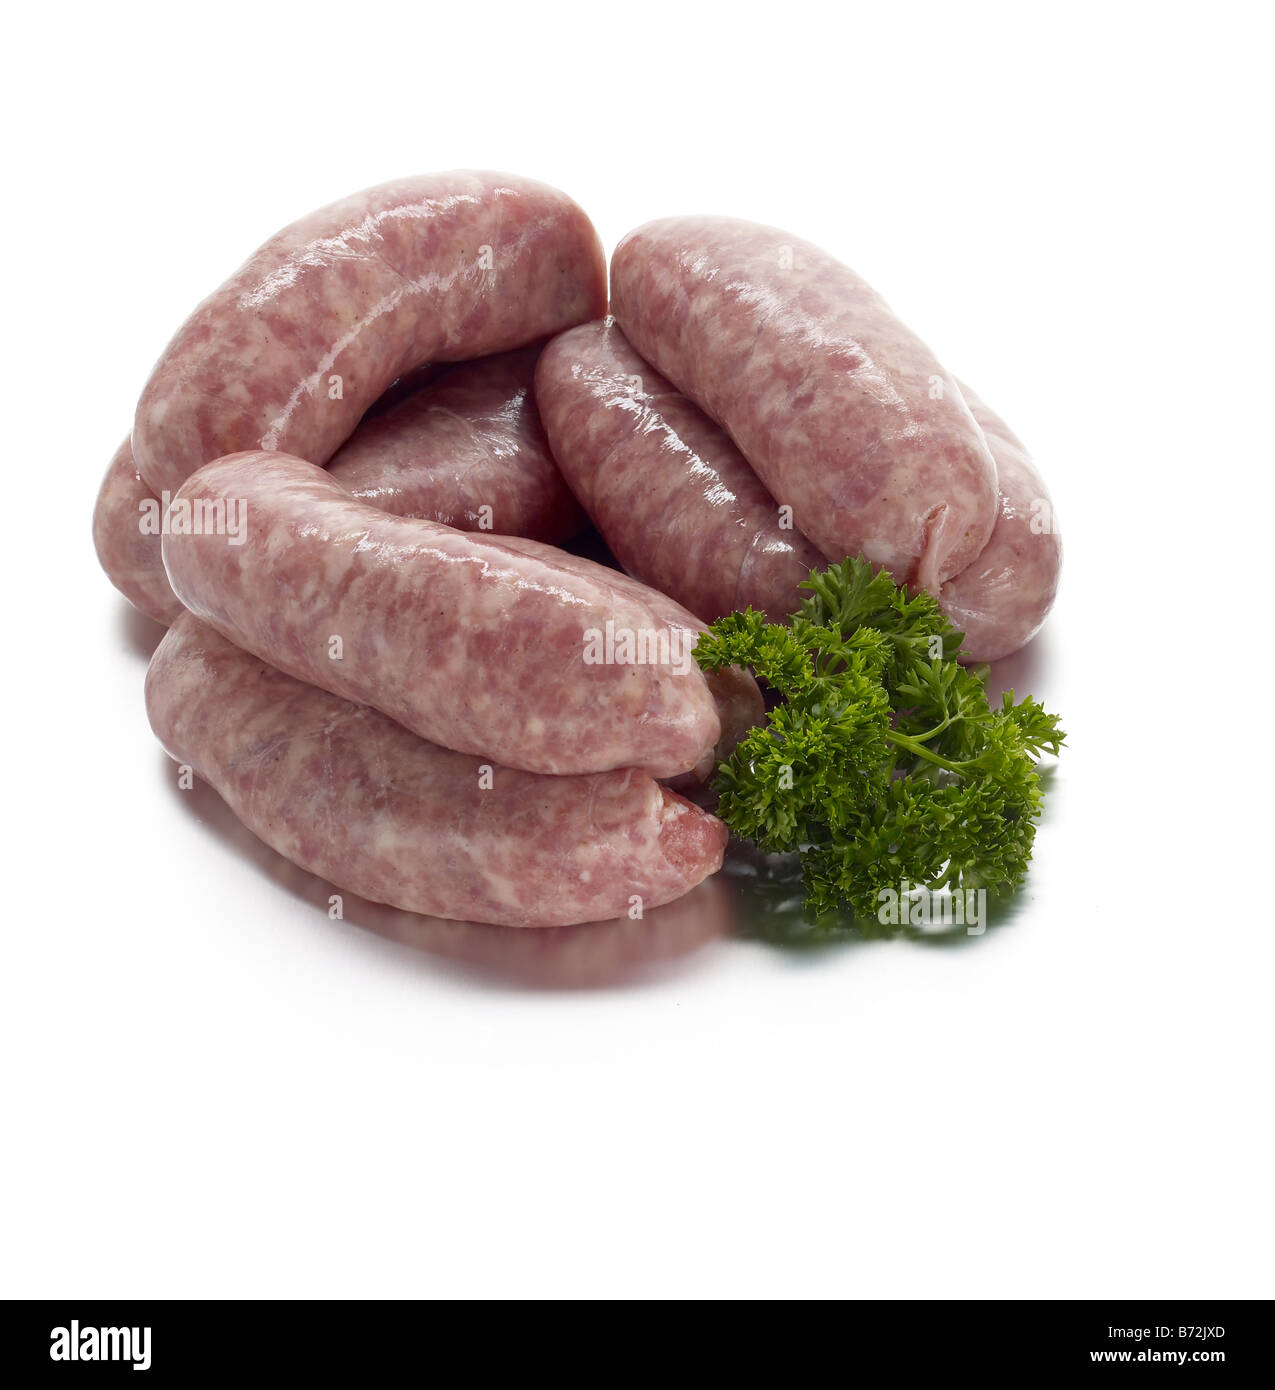 pork sausages Stock Photo